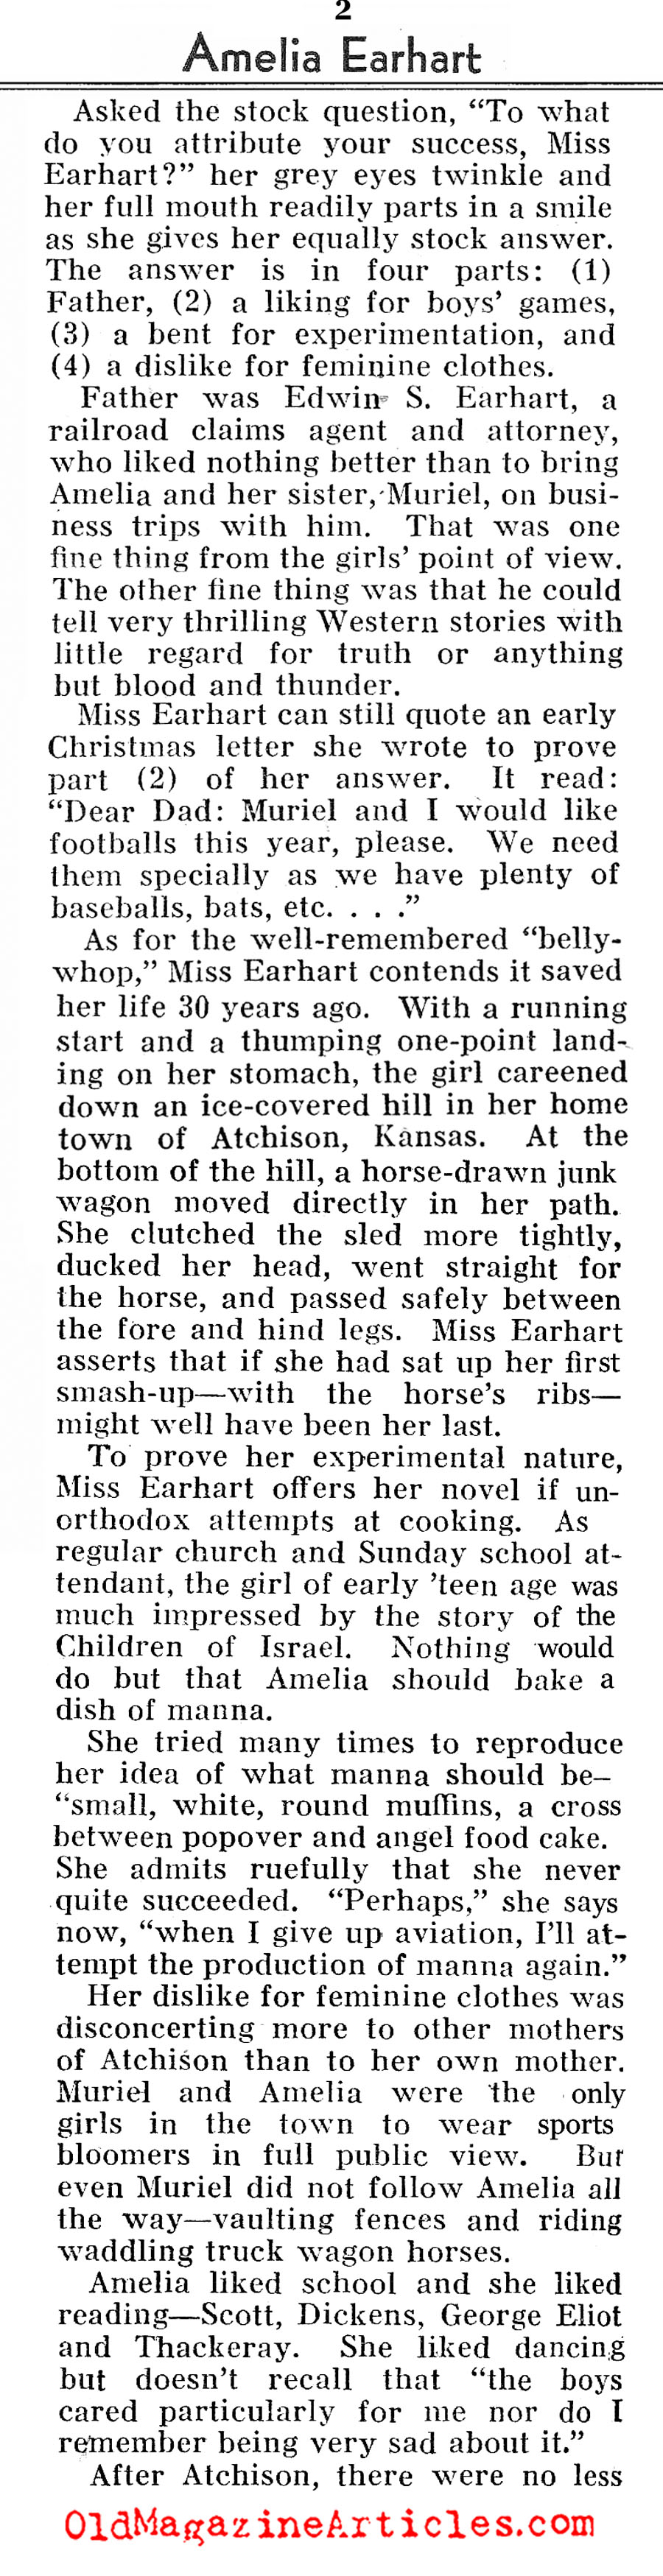 The Doomed Amelia Earhart (Pathfinder Magazine, 1937)